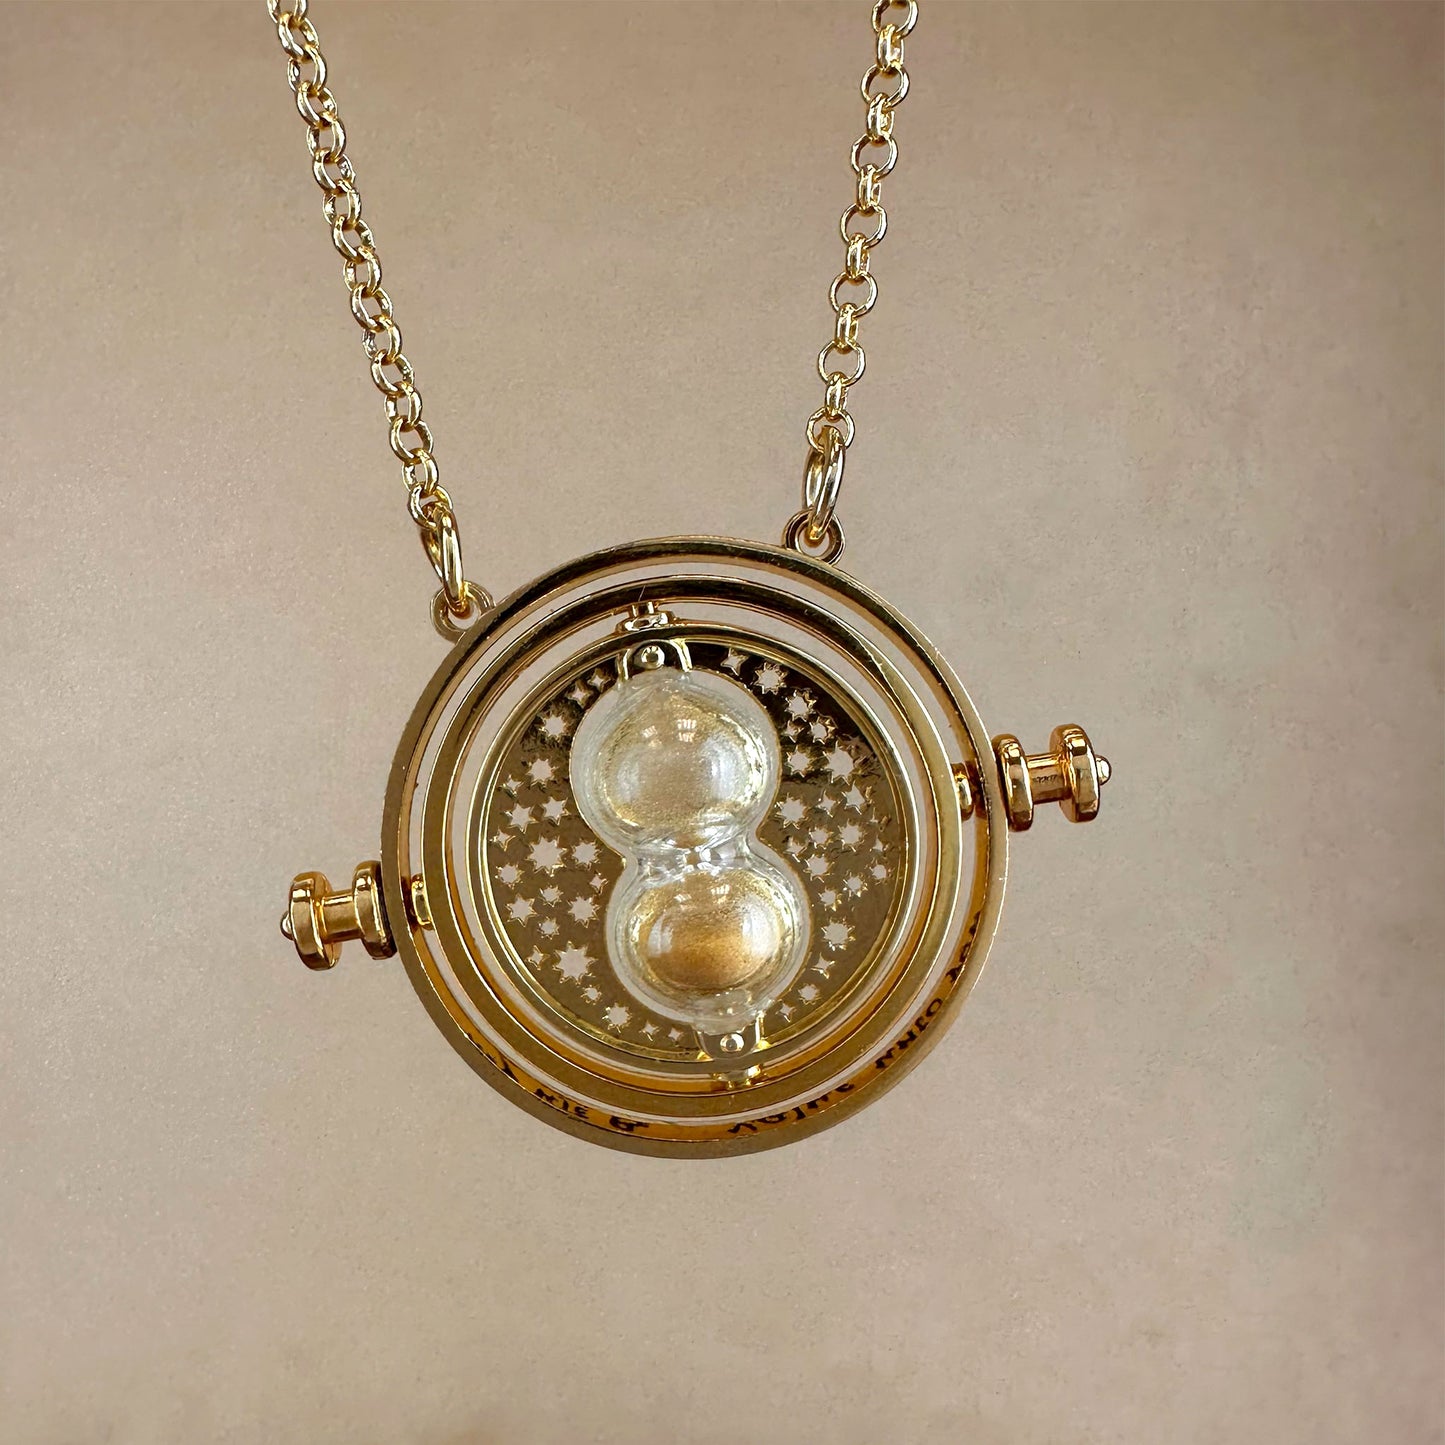 Time Turner (Harry Potter) Spinning Necklace